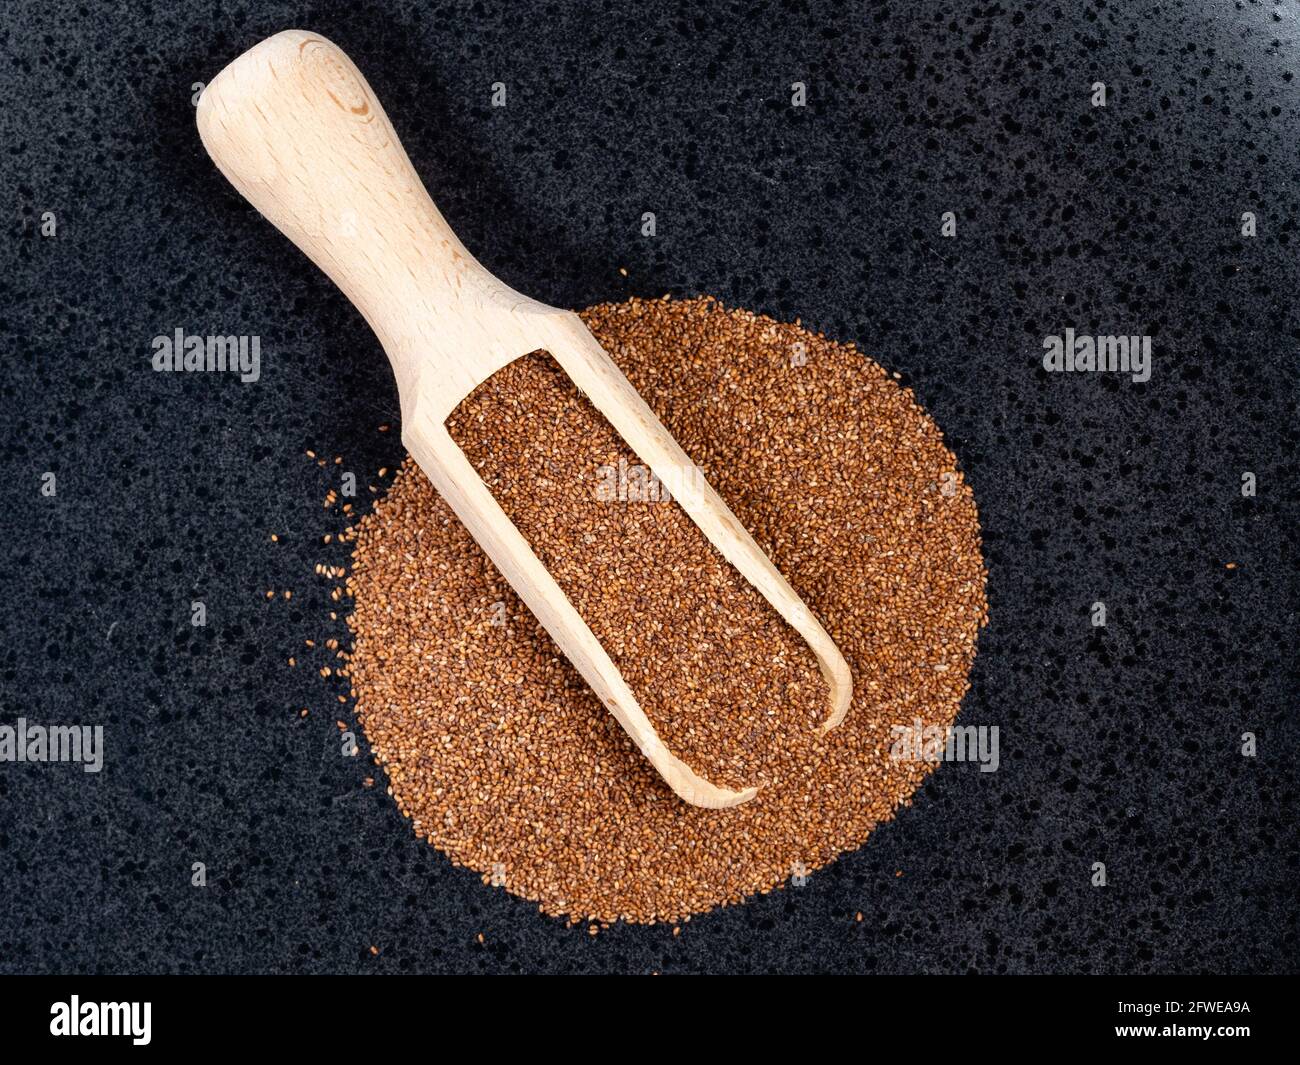 top view of wood scoop on pile of wholegrain teff seeds on black plate Stock Photo